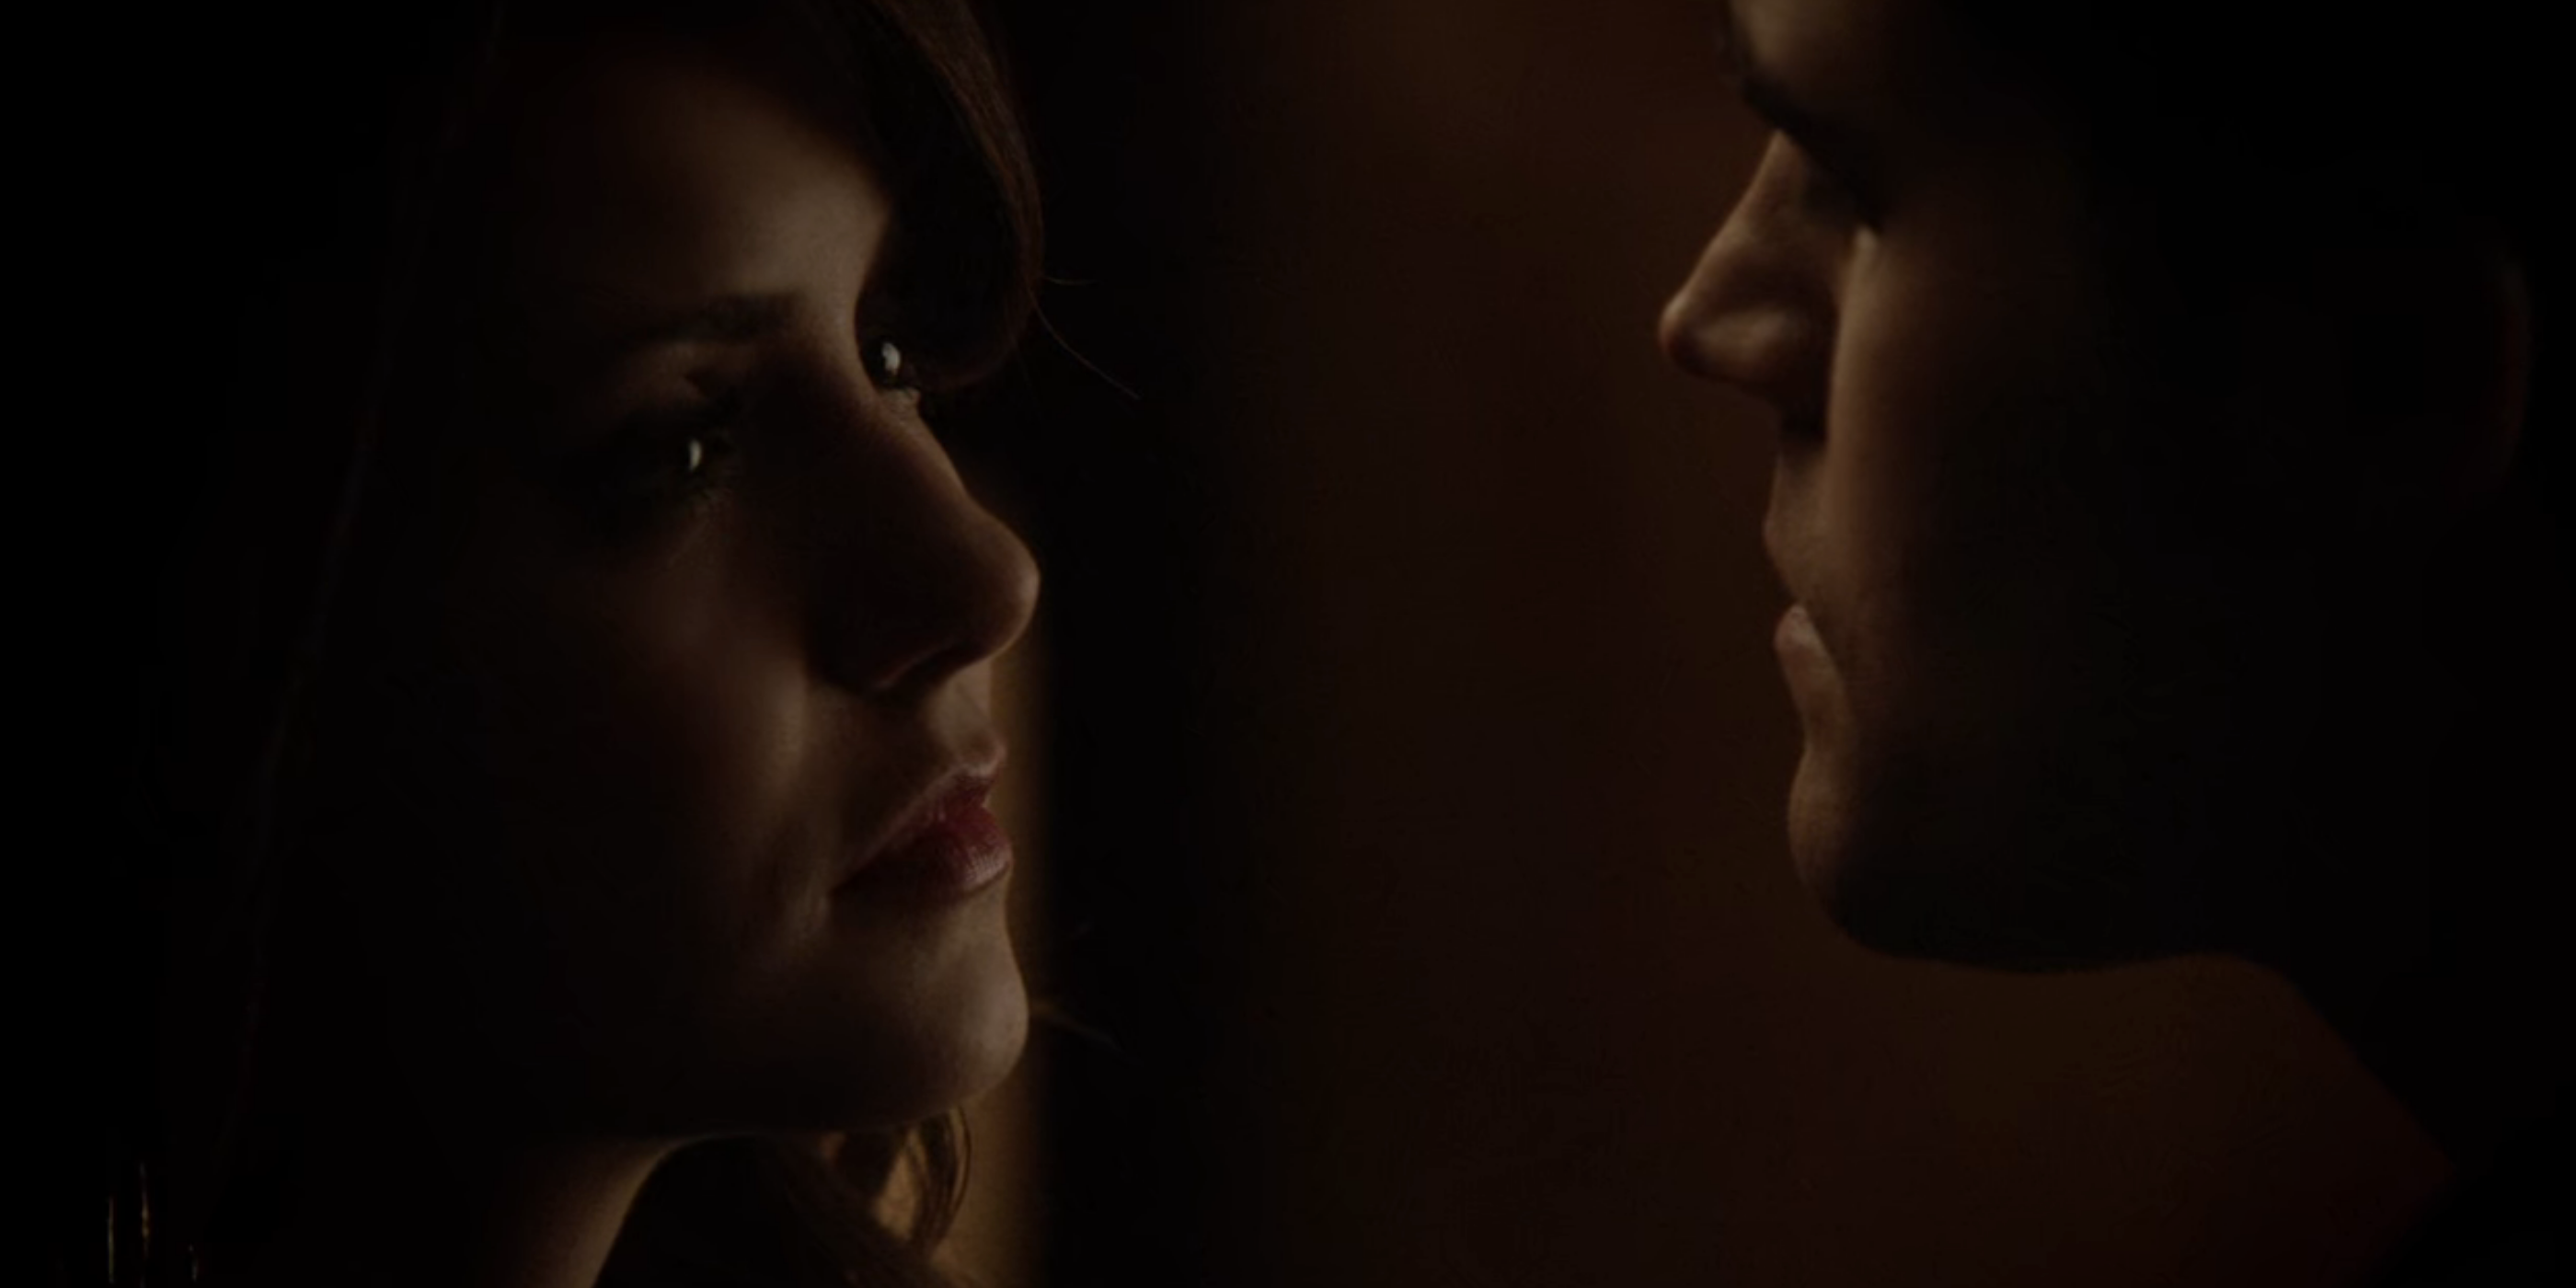 Katherine confesses her love to Stefan before she dies in The Vampire Diaries.